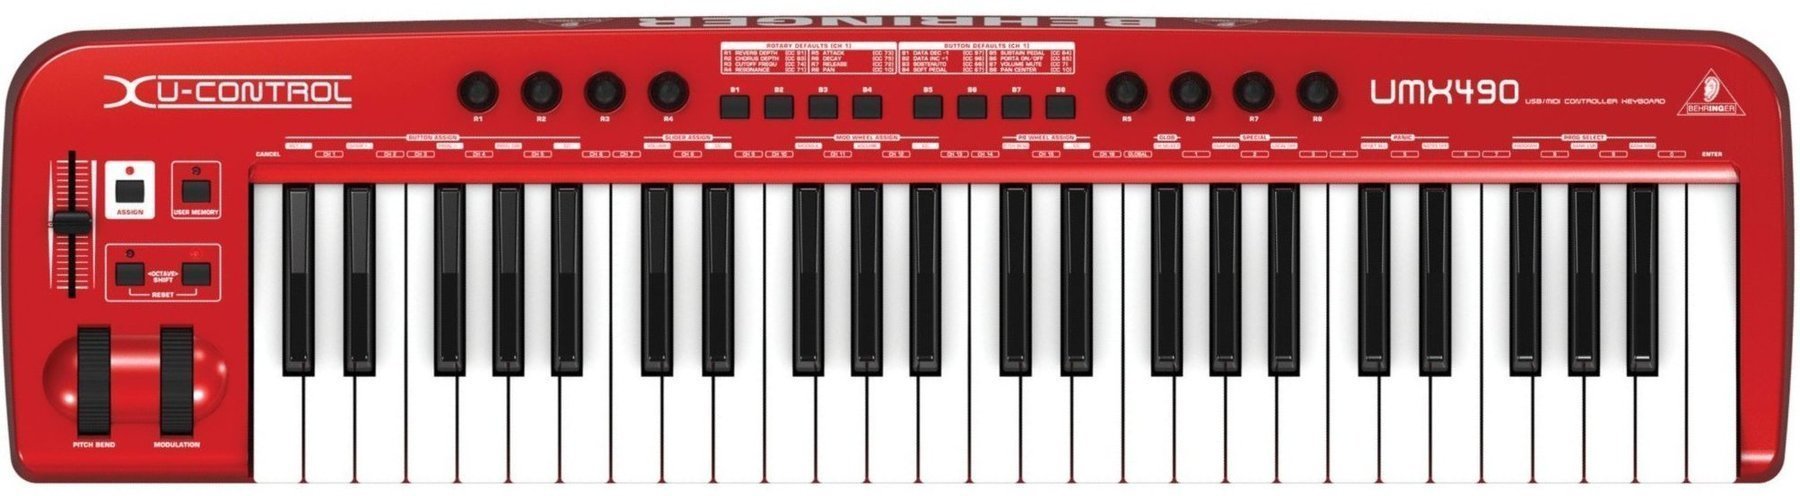 Master-Keyboard Behringer UMX 490 U-CONTROL